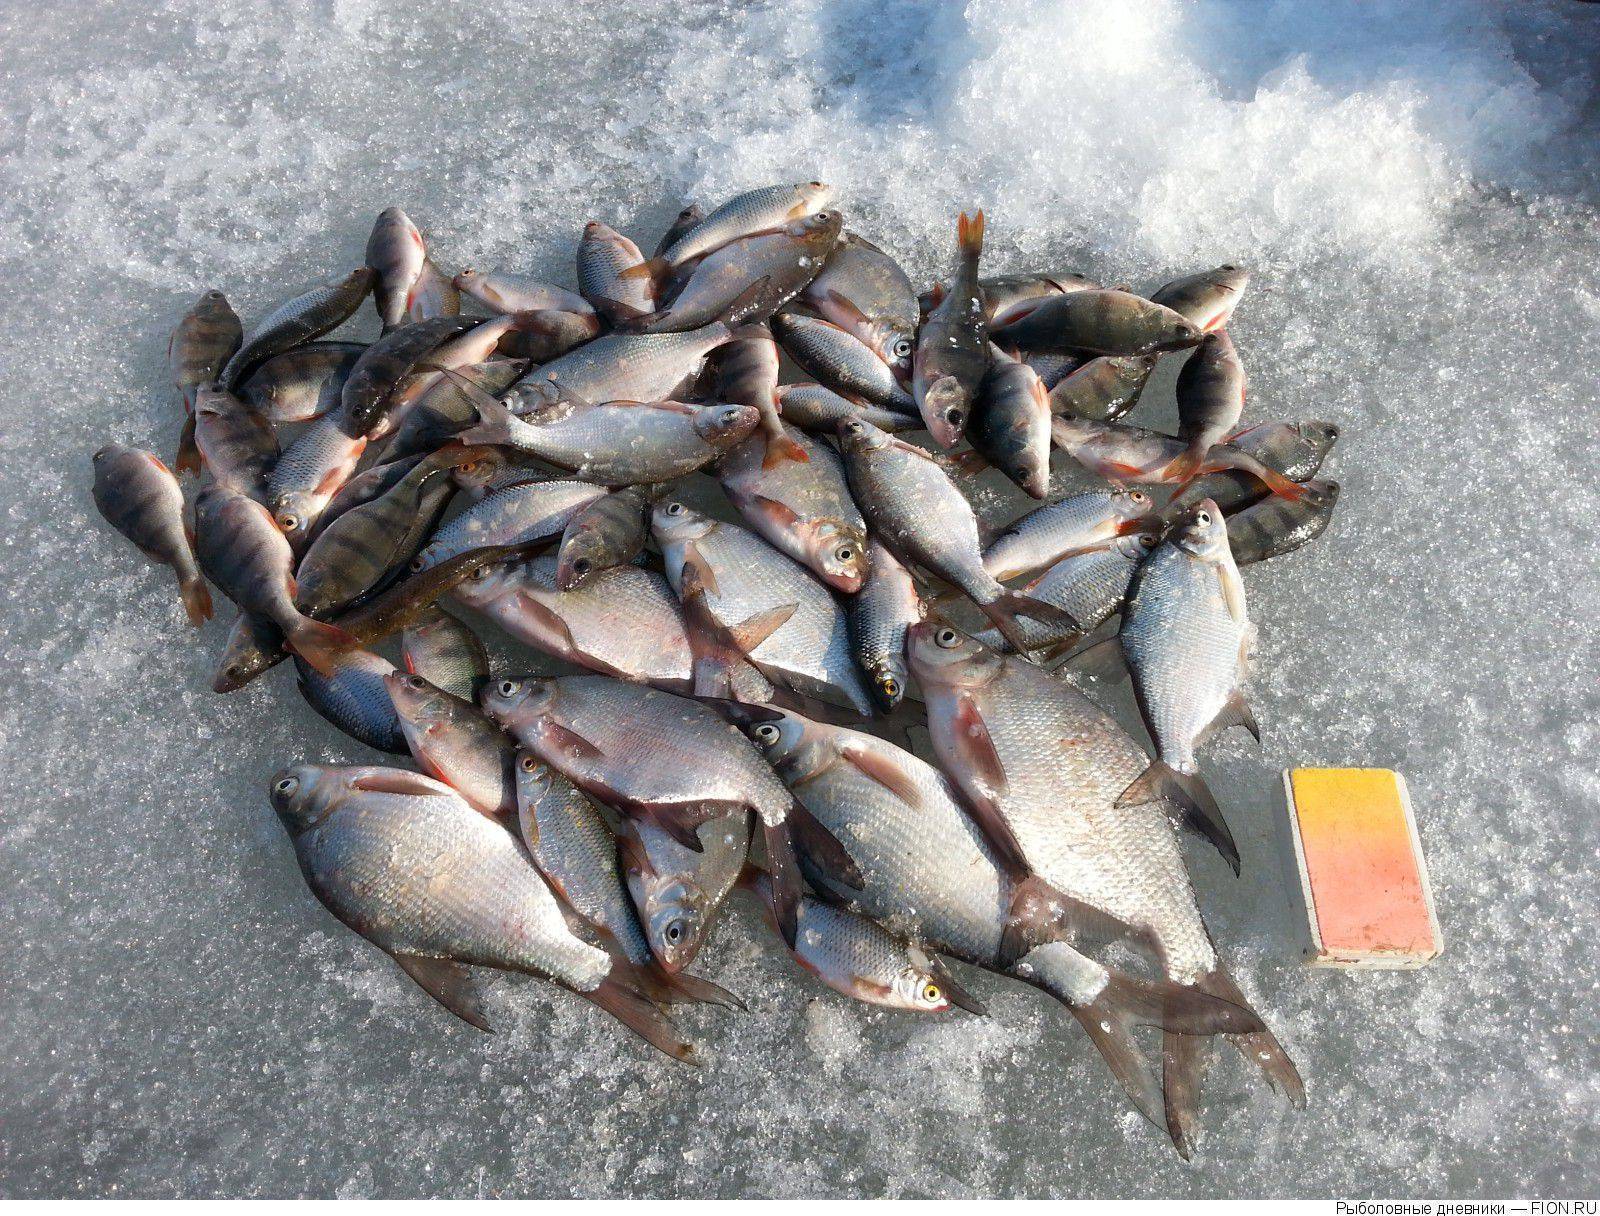 Рыбалка онлайн! ловля рыбы, отчеты о рыбалке